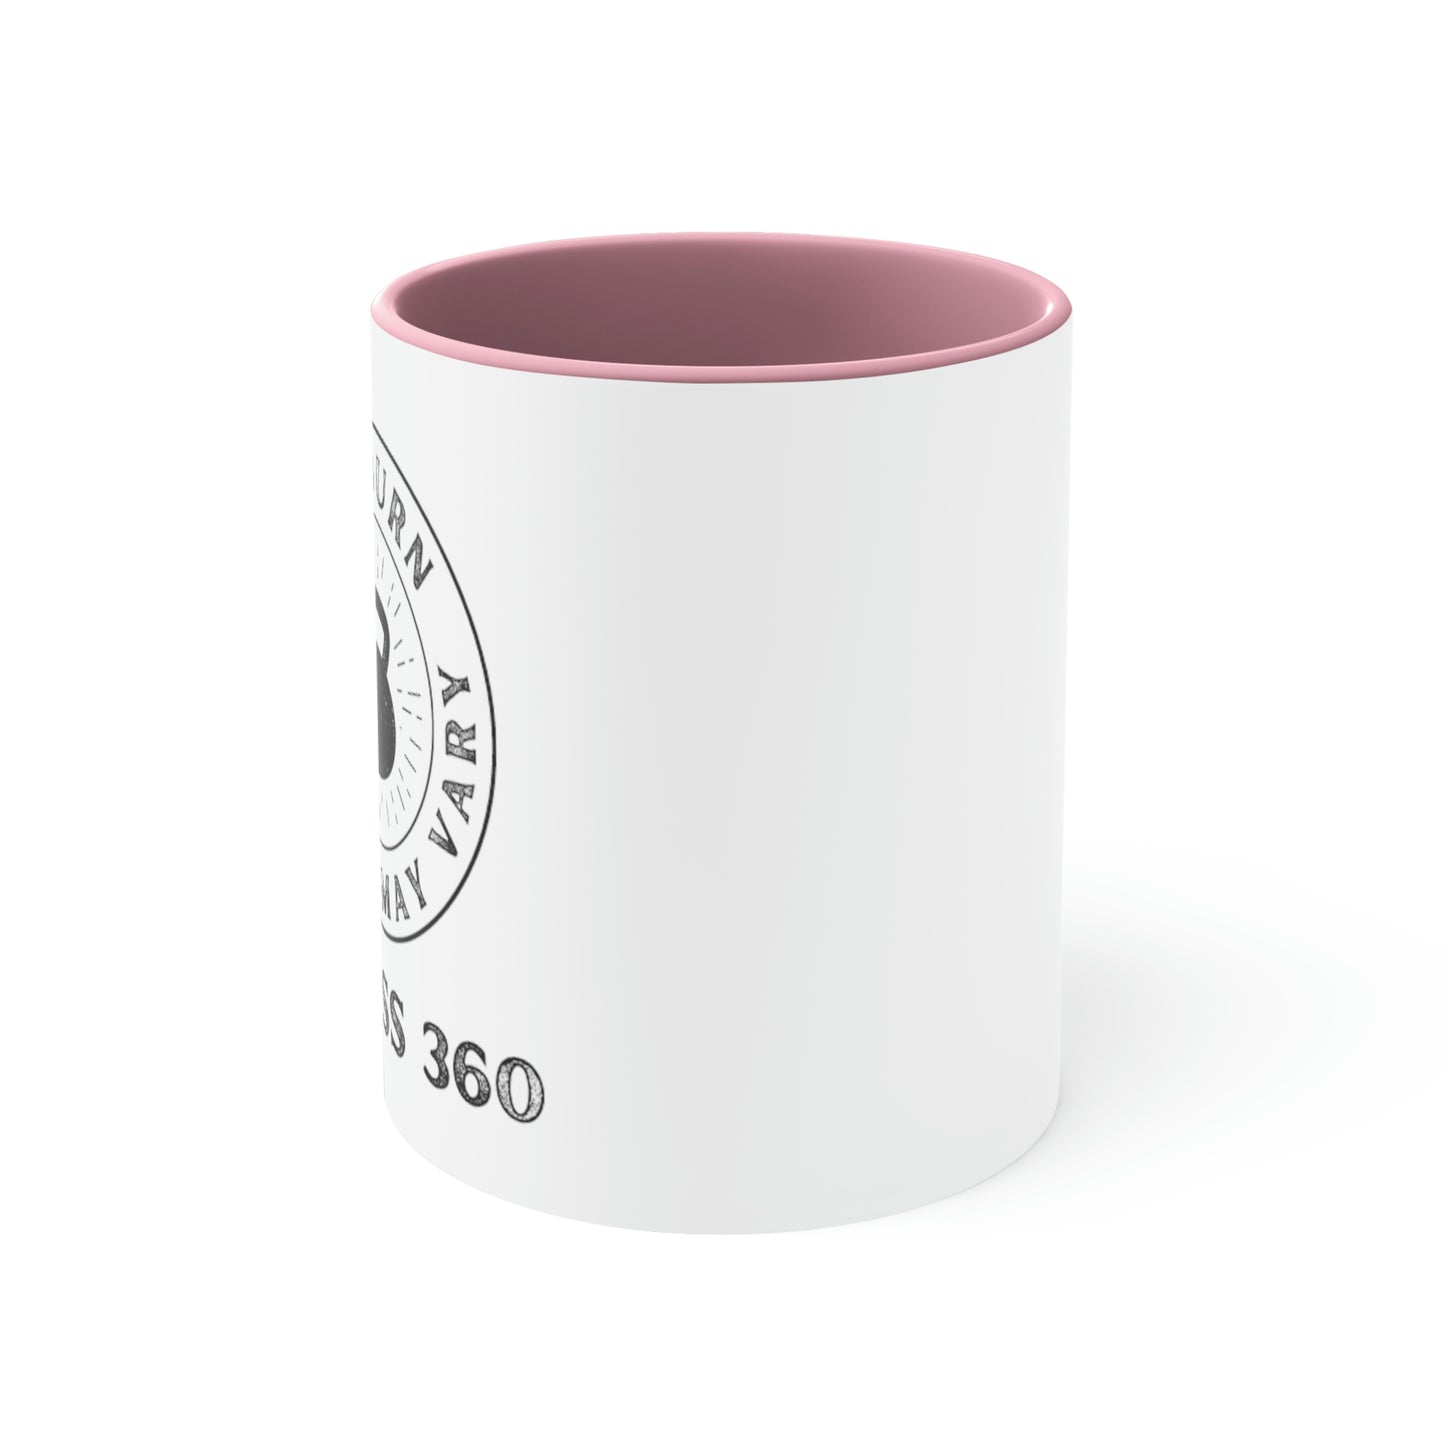 360 Burn Coffee Mug, 11oz